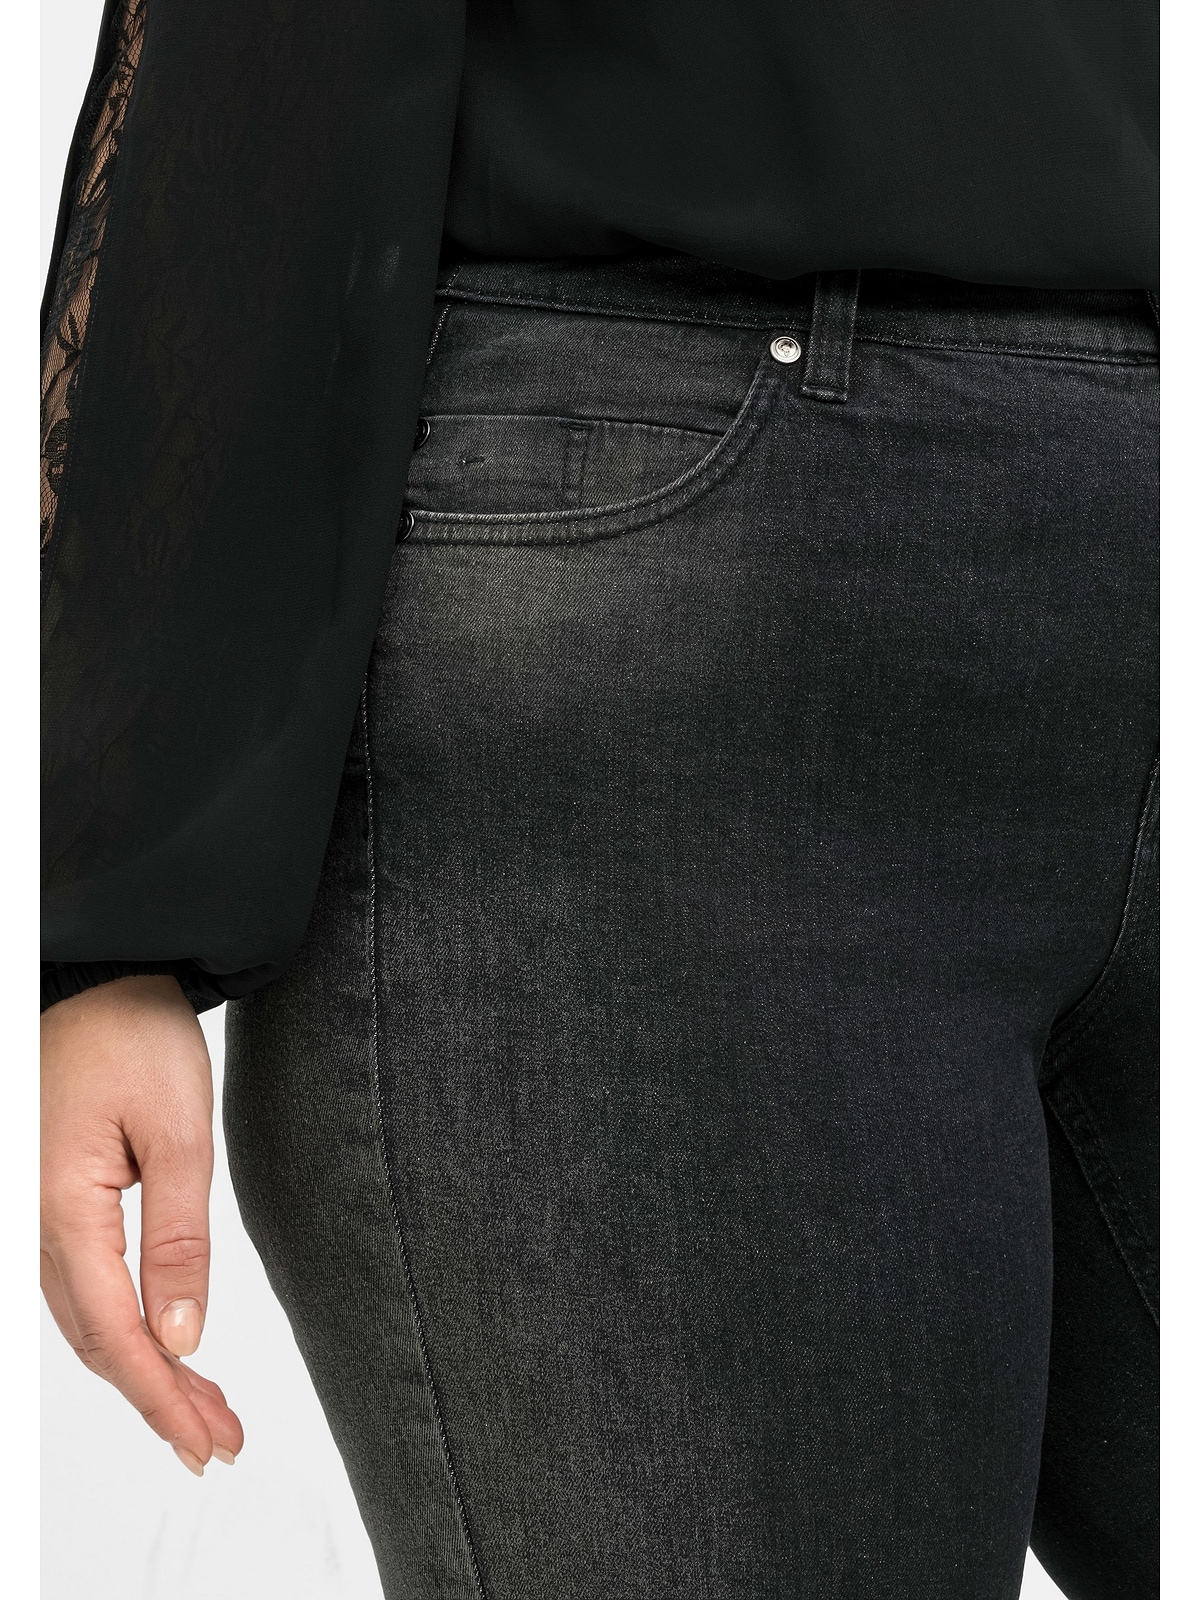 Sheego Gerade Waschung, individueller extralang mit »Große Größen«, Jeans bestellen